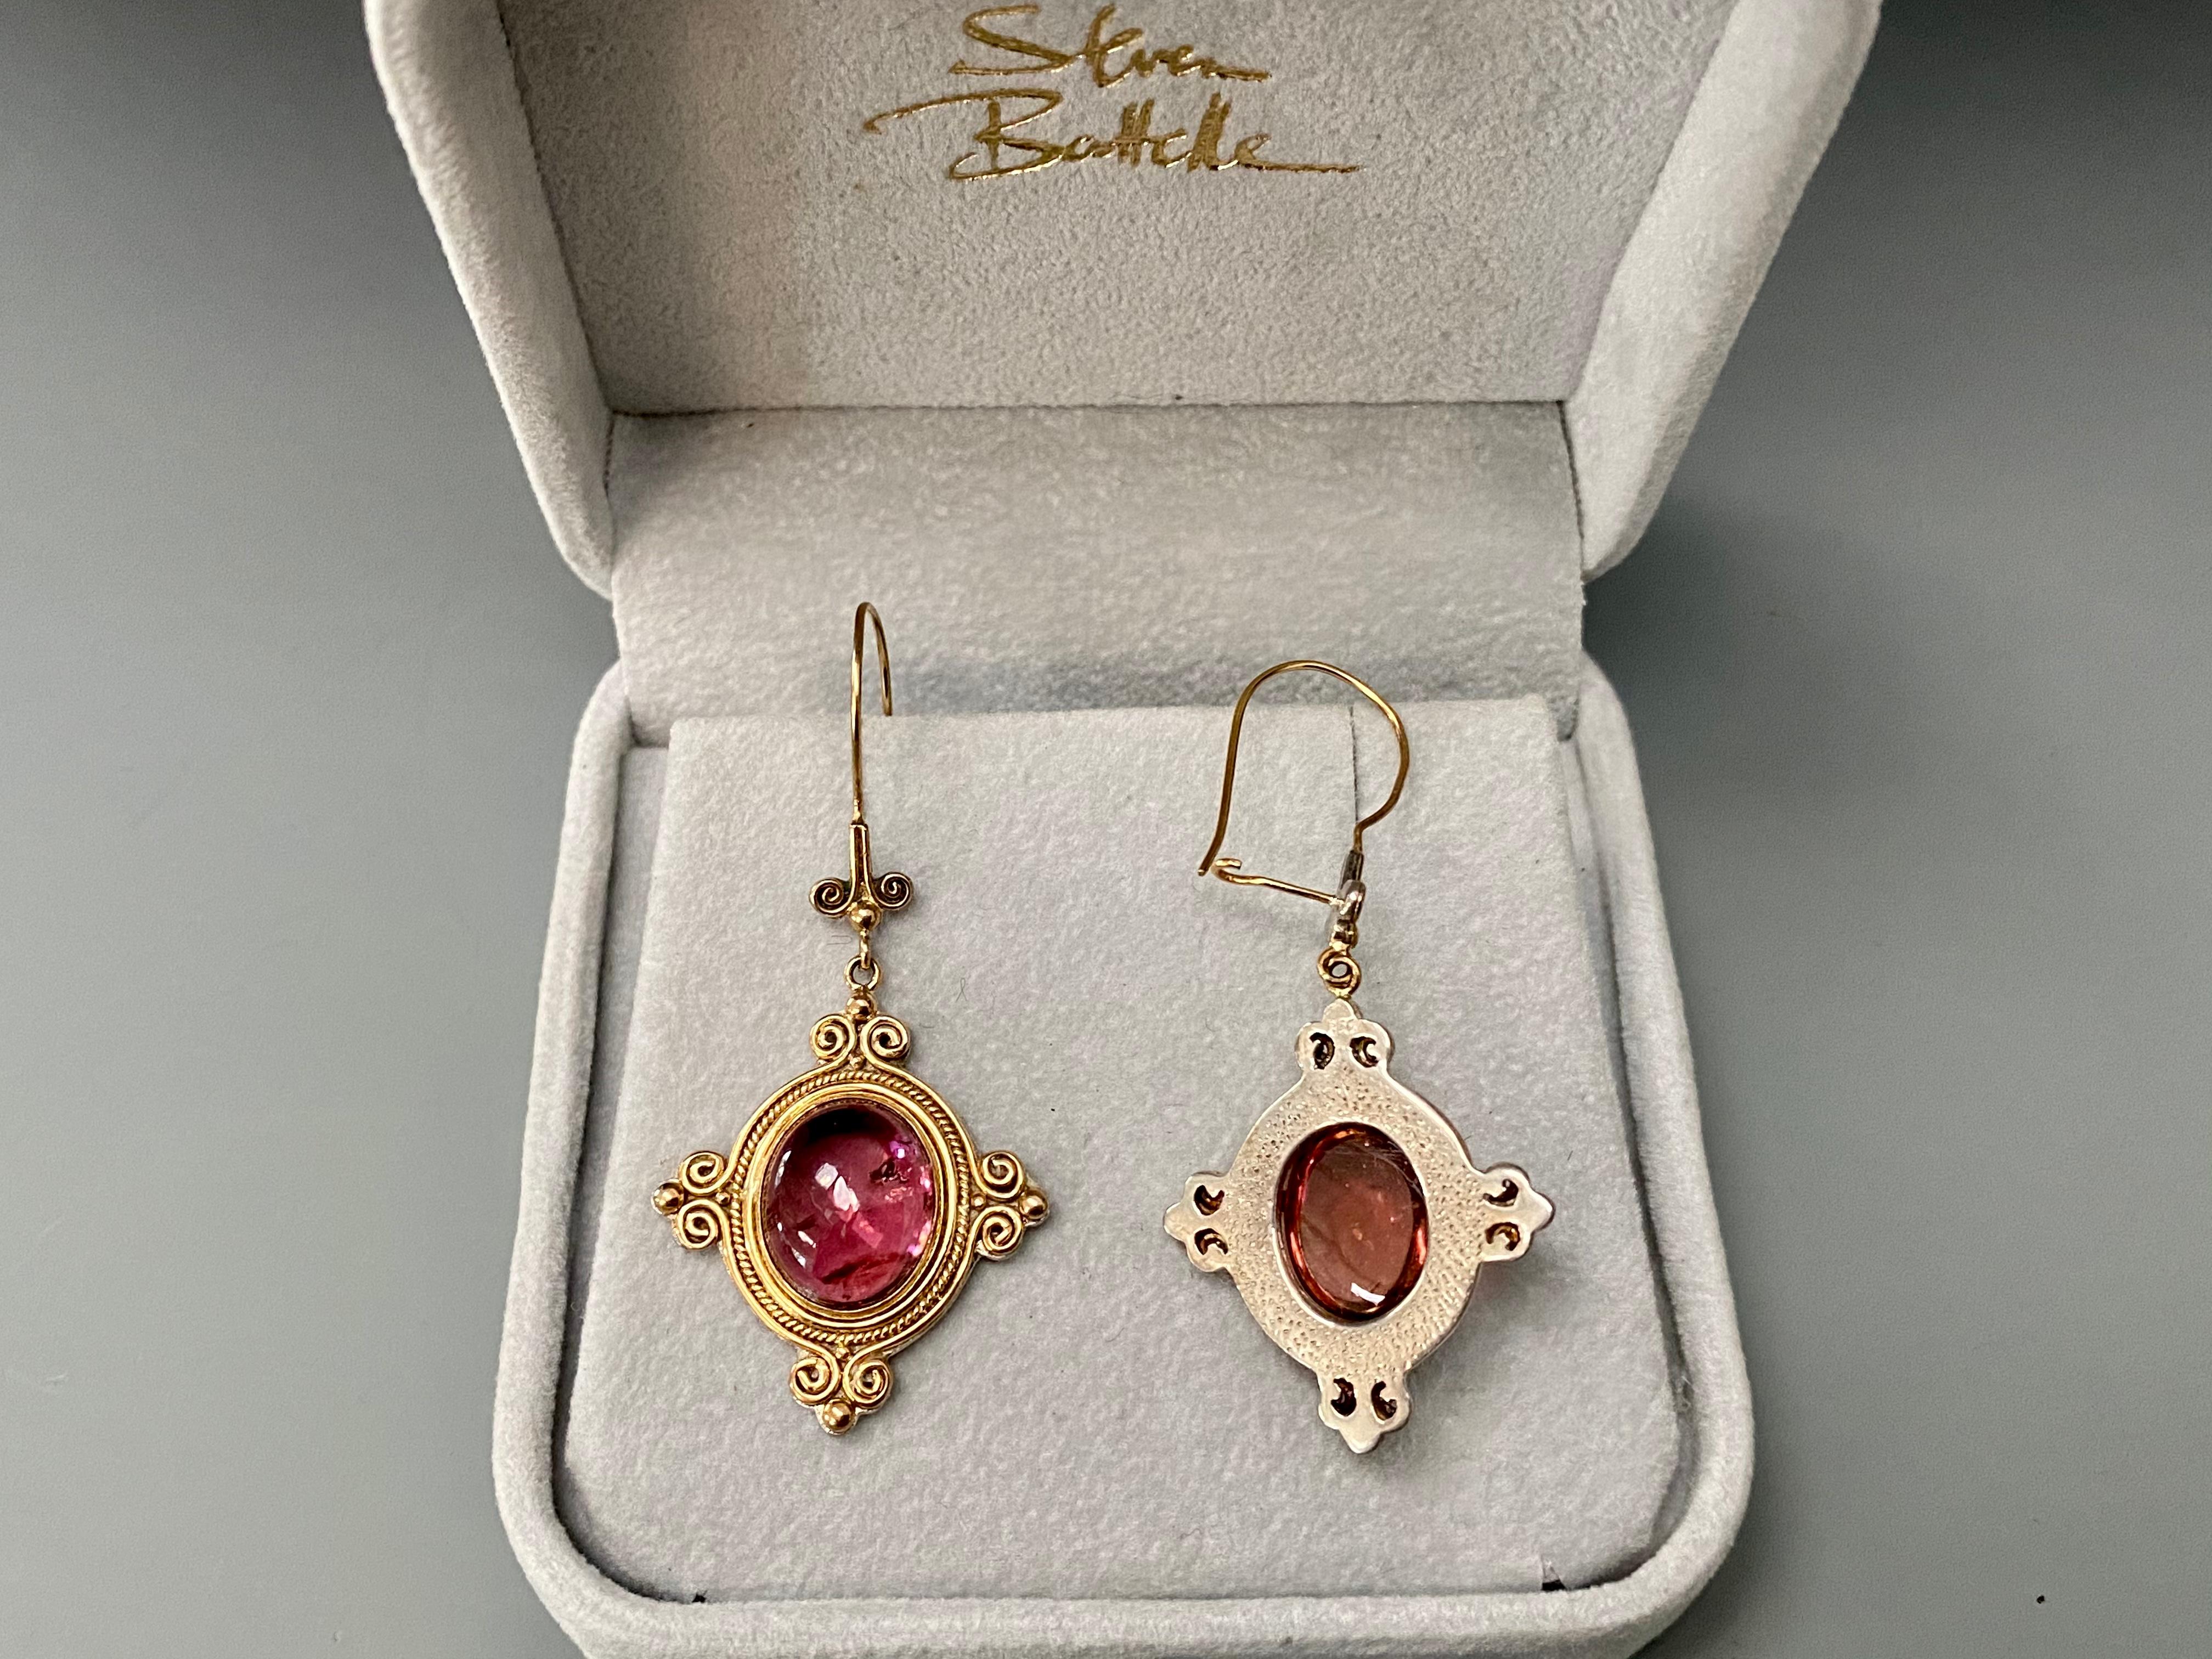 Steven Battelle 13.5 Carat Pink Tourmaline Drop Earrings 18K Gold/Sterling In New Condition For Sale In Soquel, CA